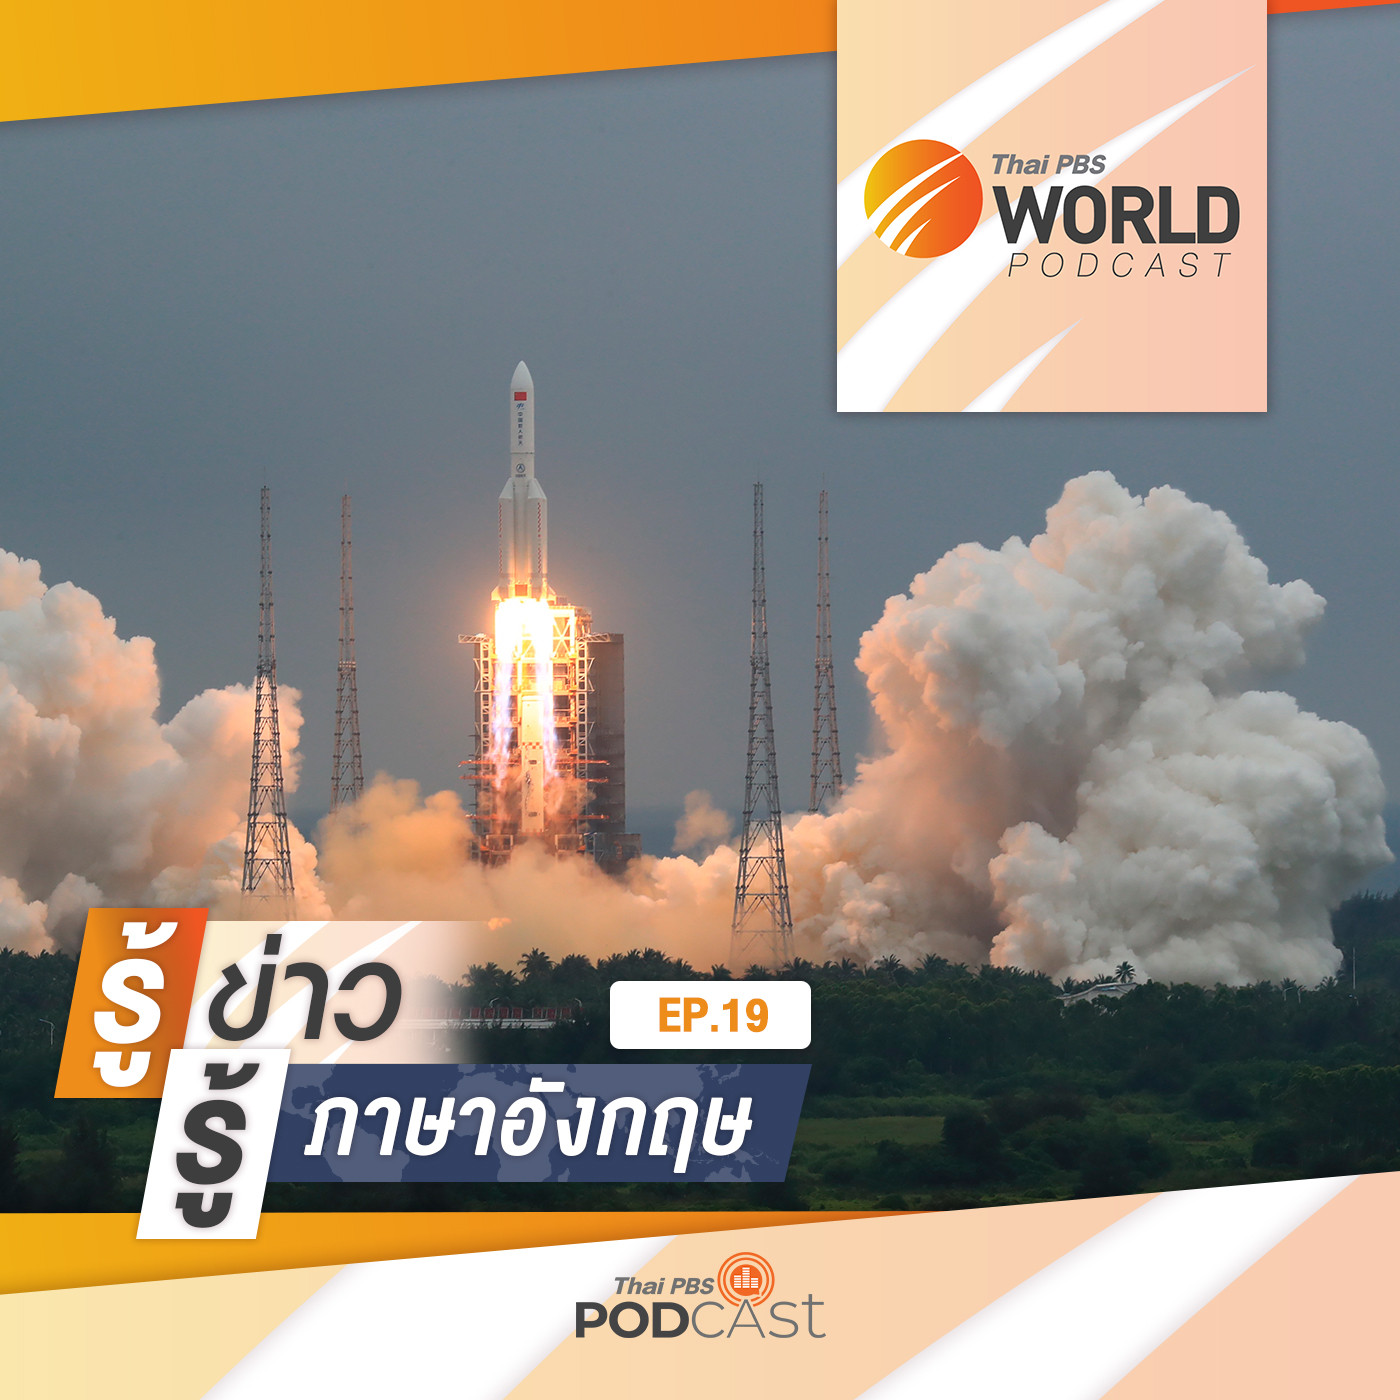 Thai PBS World Podcast - รู้ข่าว รู้ภาษาอังกฤษ EP. 19: รู้ข่าว รู้ภาษาอังกฤษ - จับตาชิ้นส่วน�